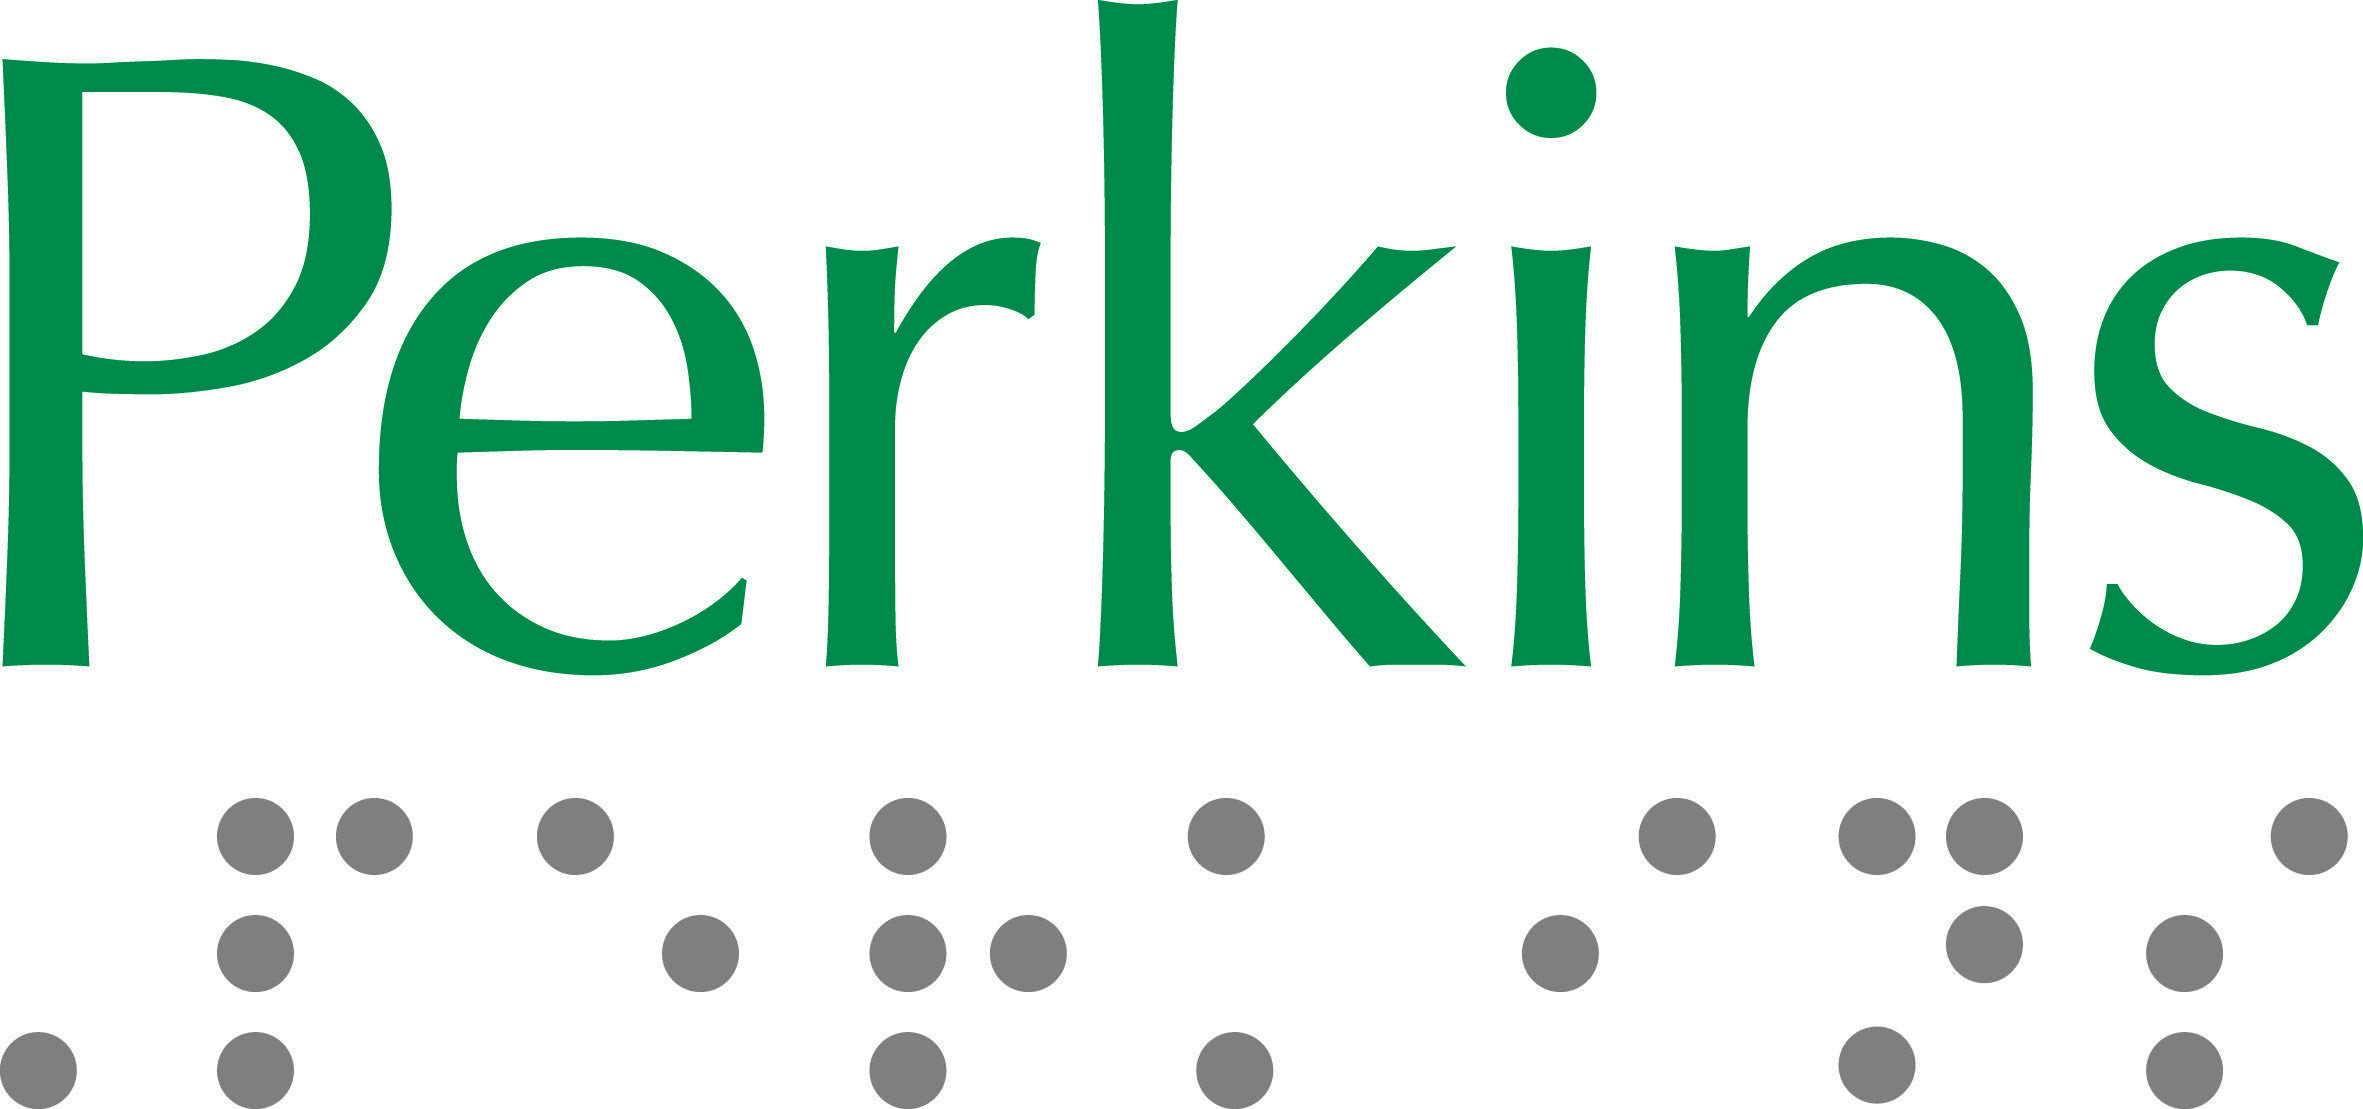 Perkins Logo - File:Perkins logo.jpg - Wikimedia Commons